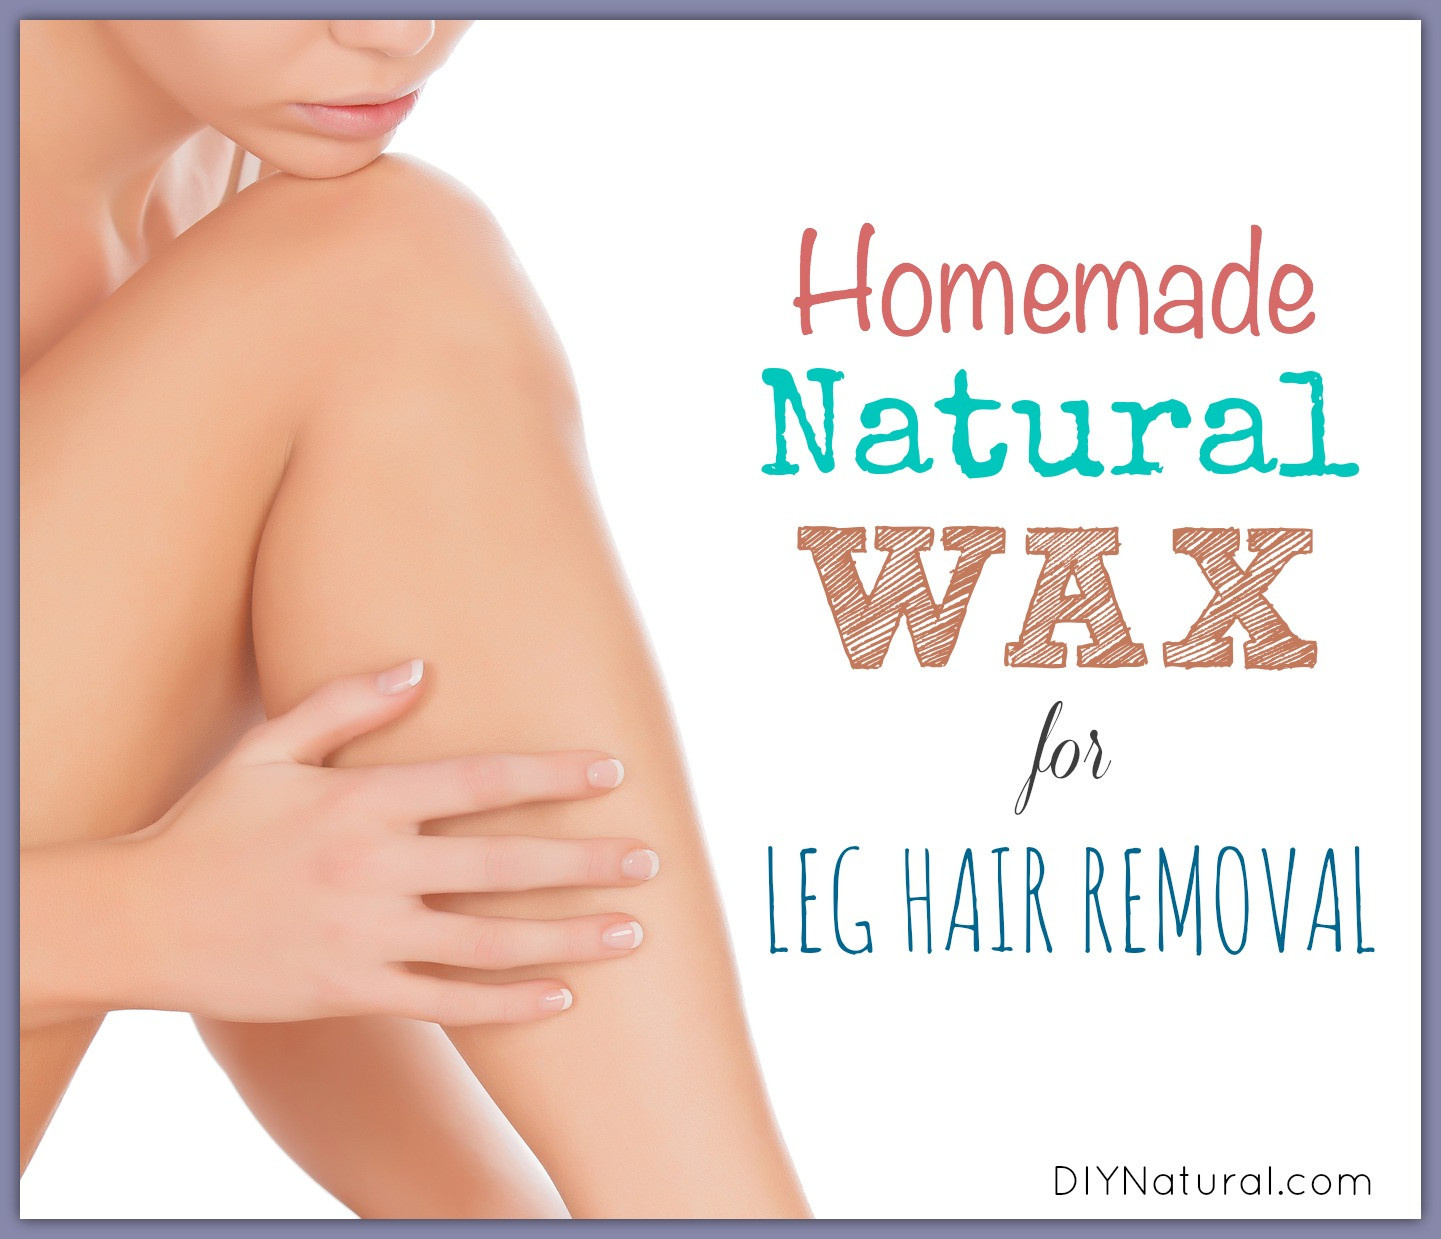 DIY Hair Wax Removal
 How To Make Sugar Wax Recipe for Natural Leg Hair Removal